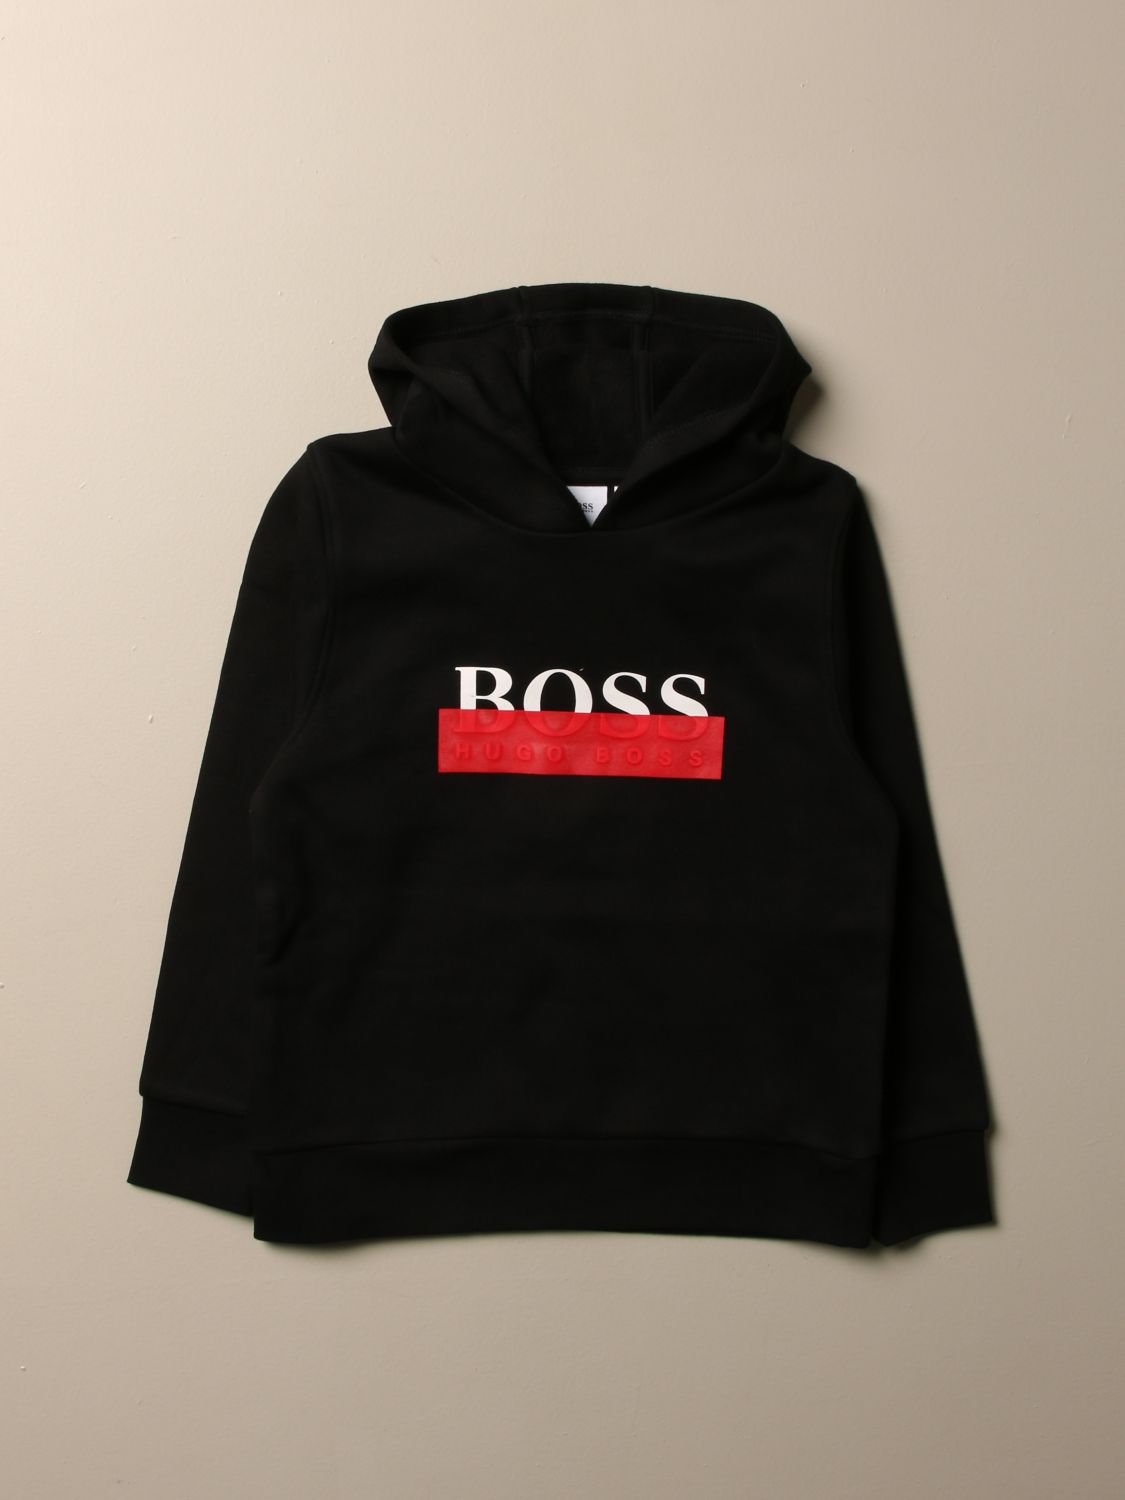 boss sweatshirt black